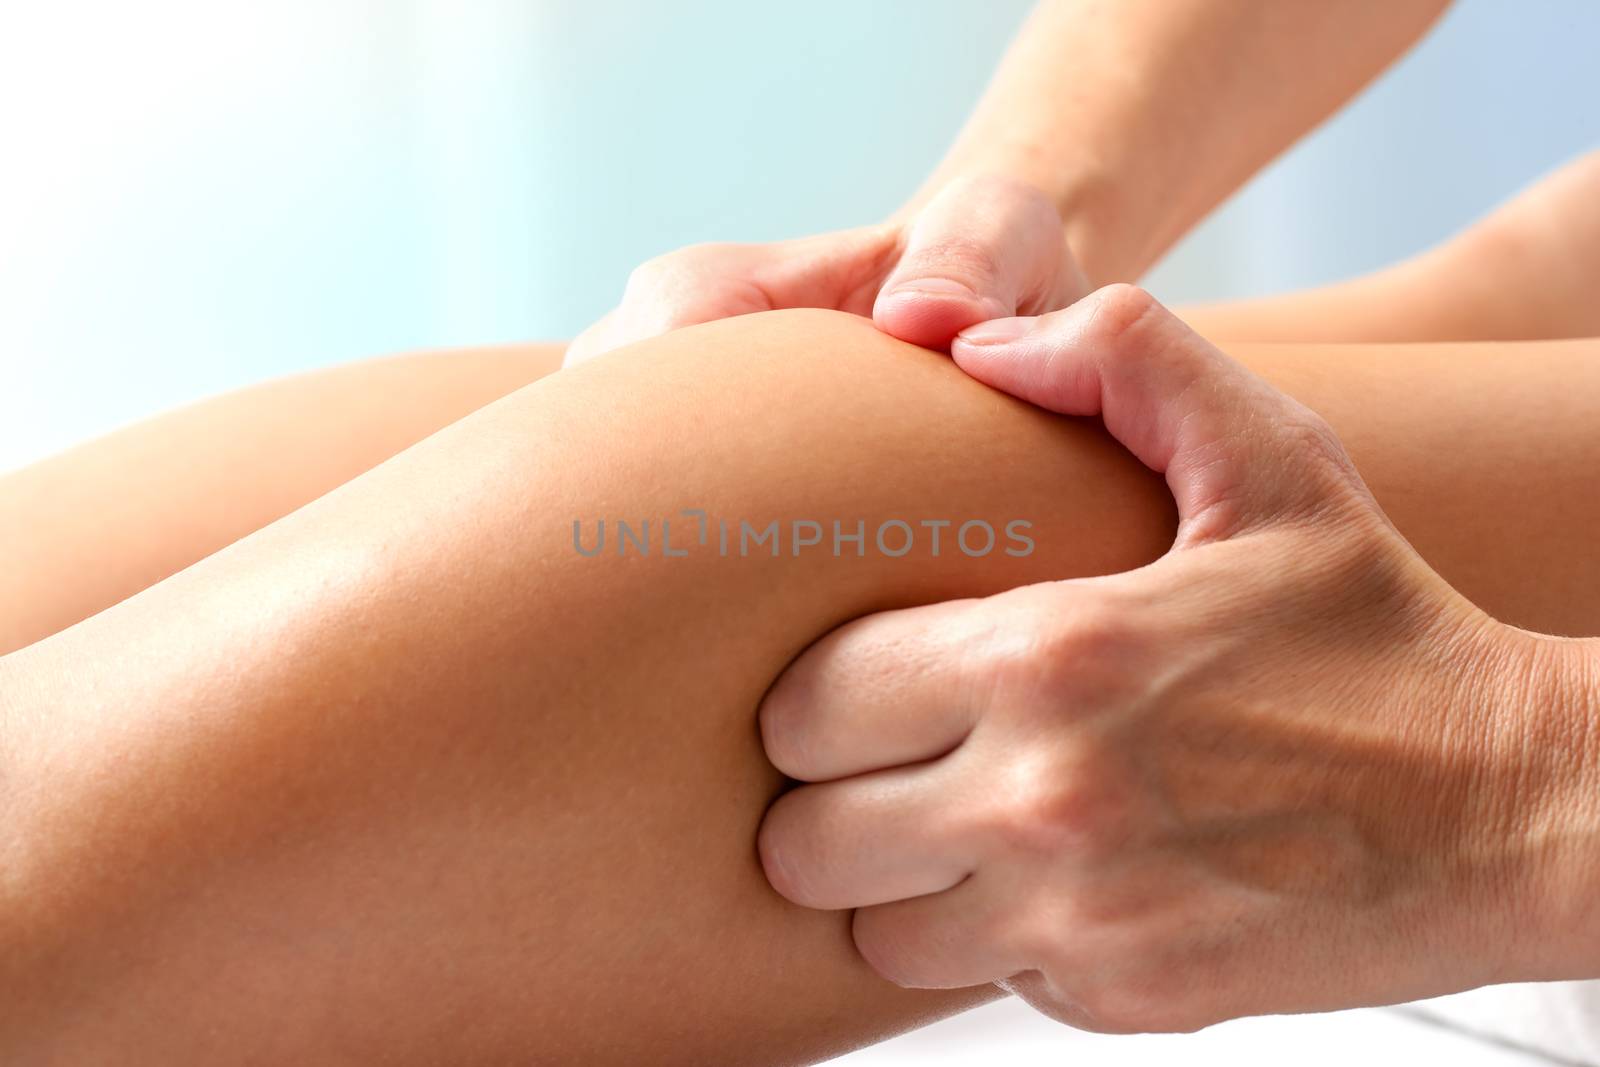 Macro close up of hands doing manipulative healing massage on female calf muscle.